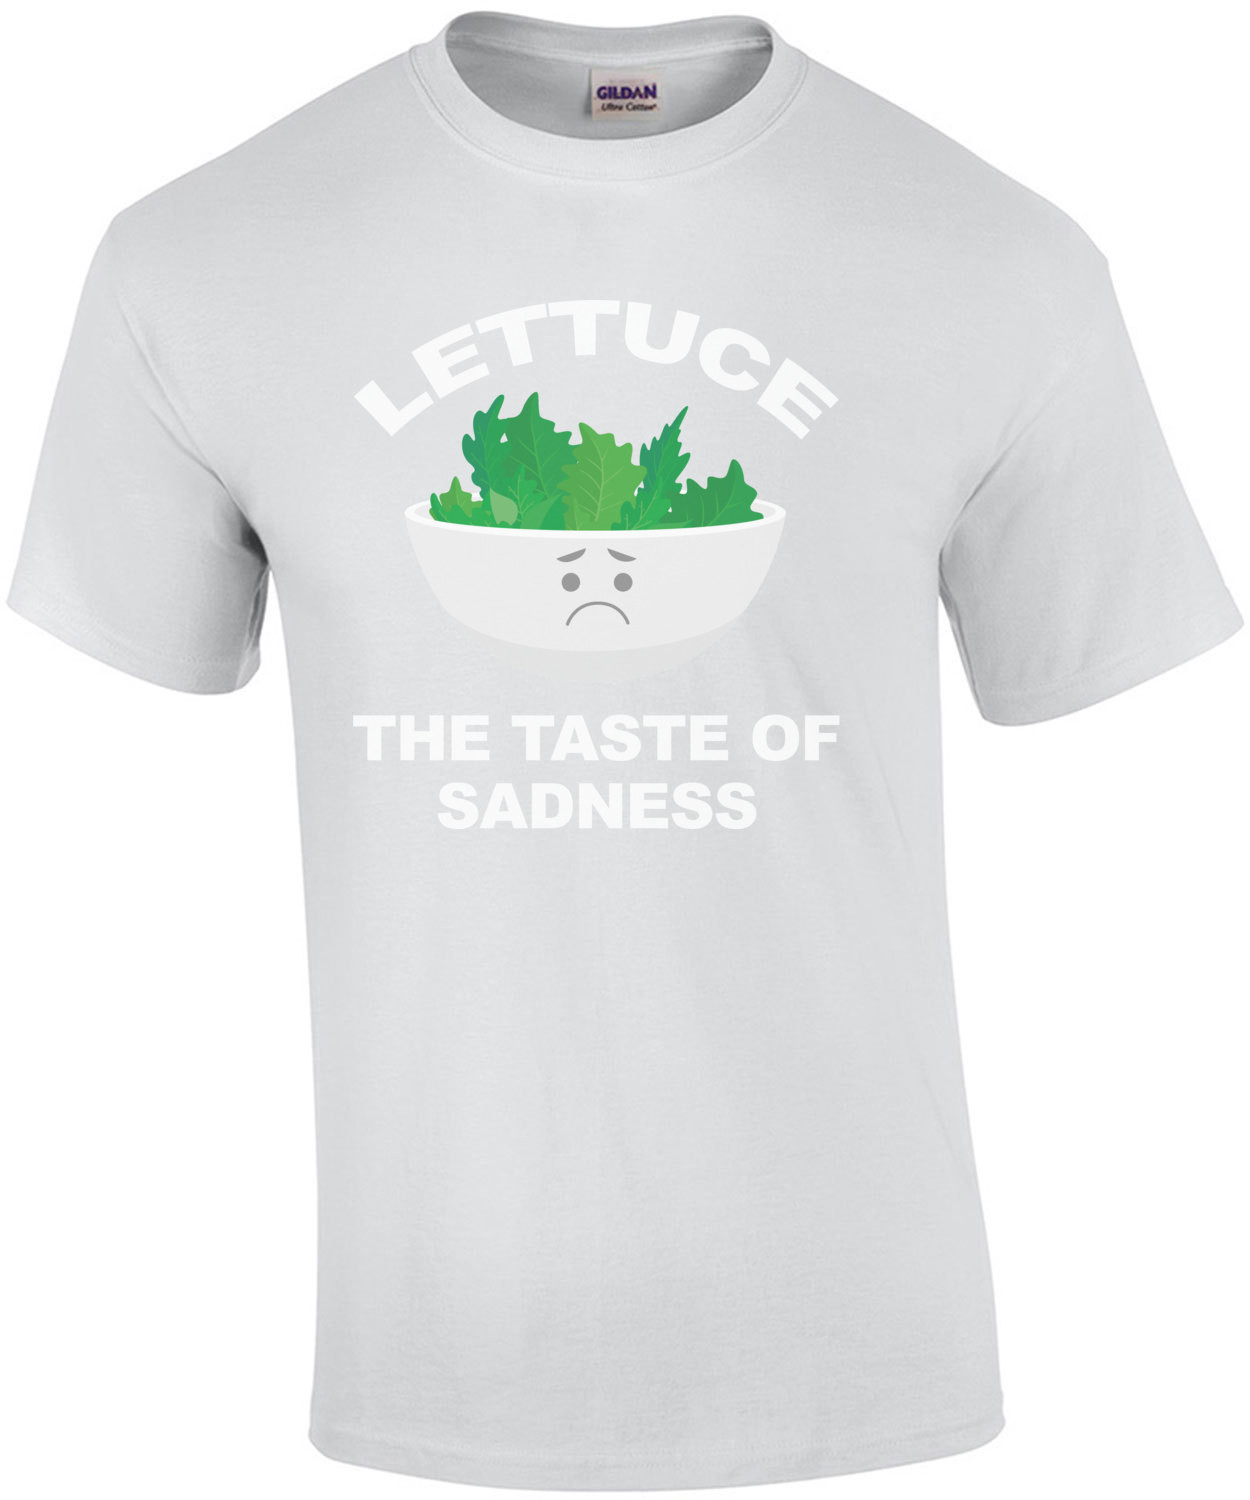 Lettuce - The taste of sadness - Funny T-Shirt